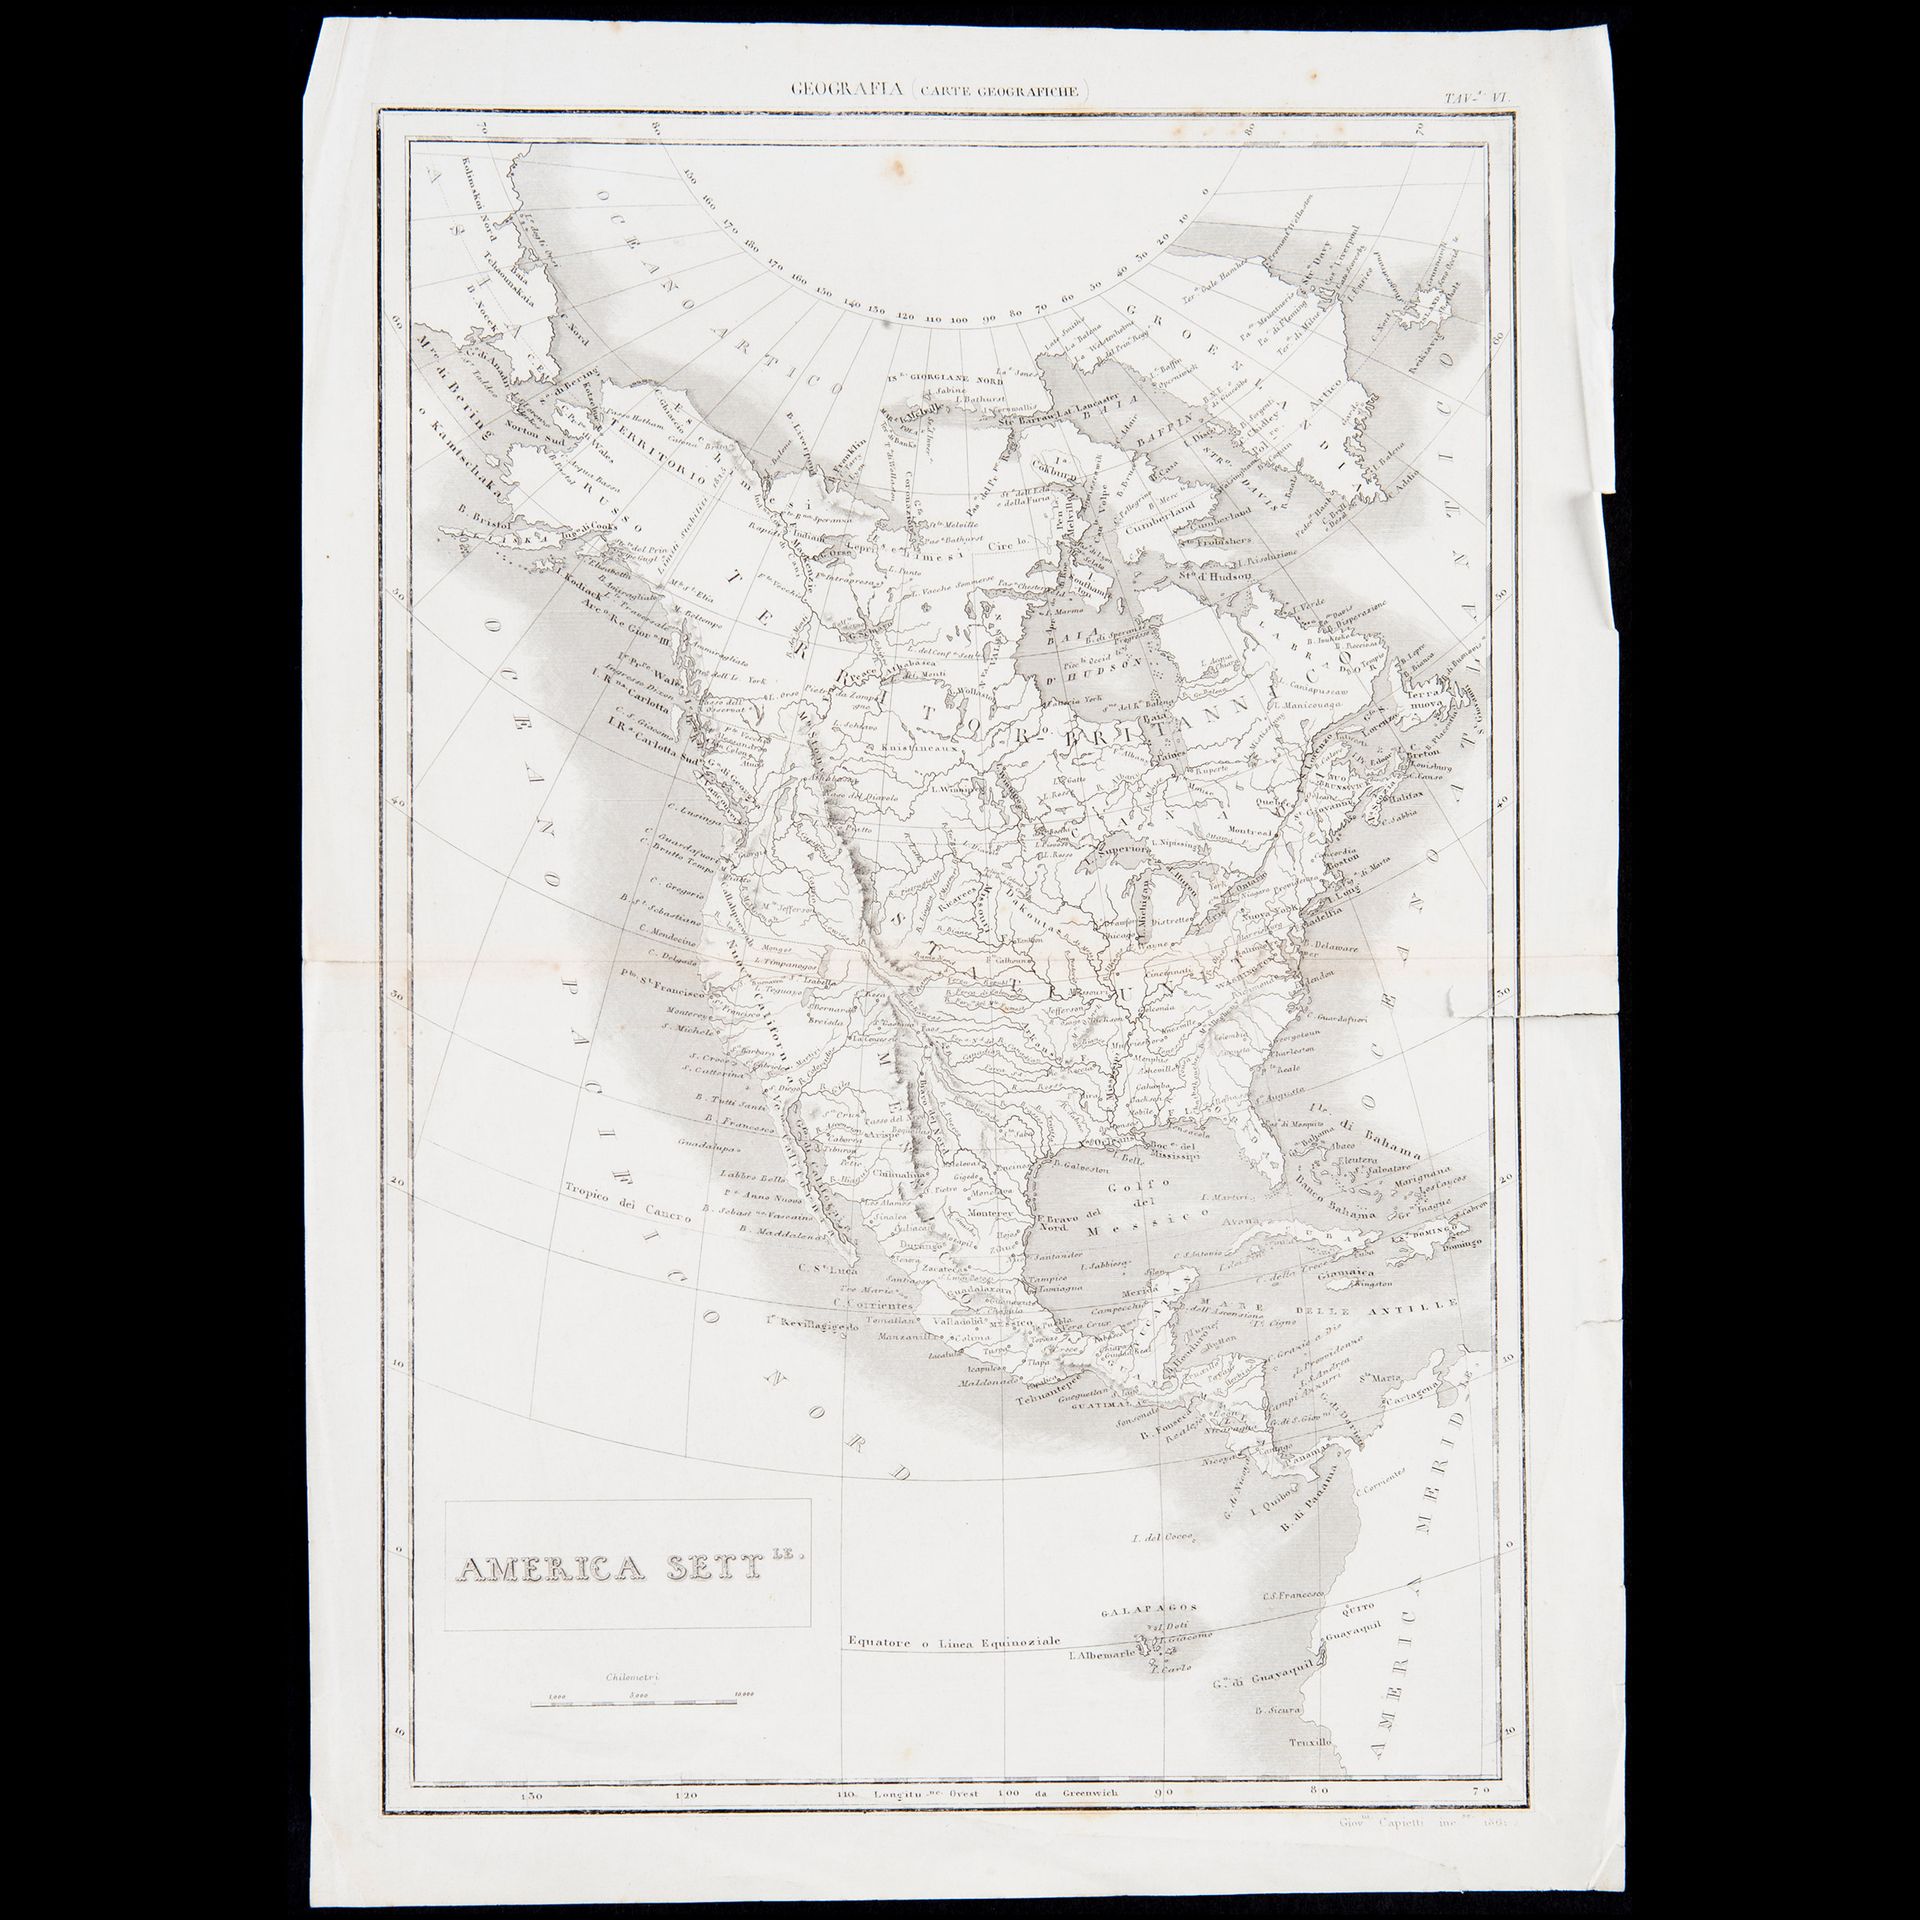 Giovanni Capietti, Map of North America, Italy 1861 Grabado extraído de la secci&hellip;